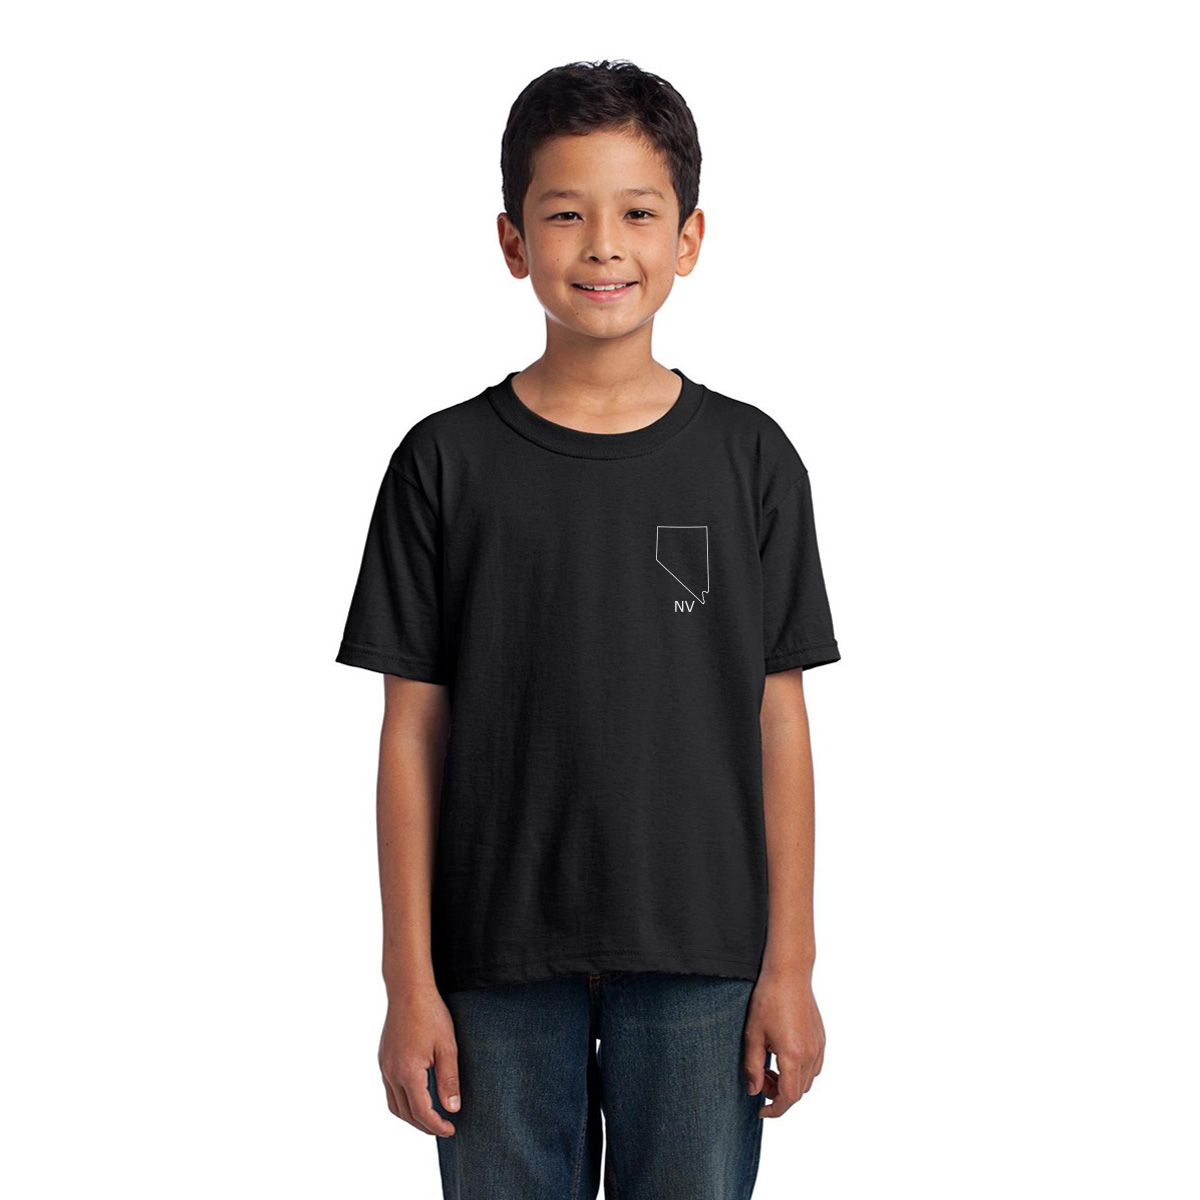 Nevada Kids T-shirt | Black